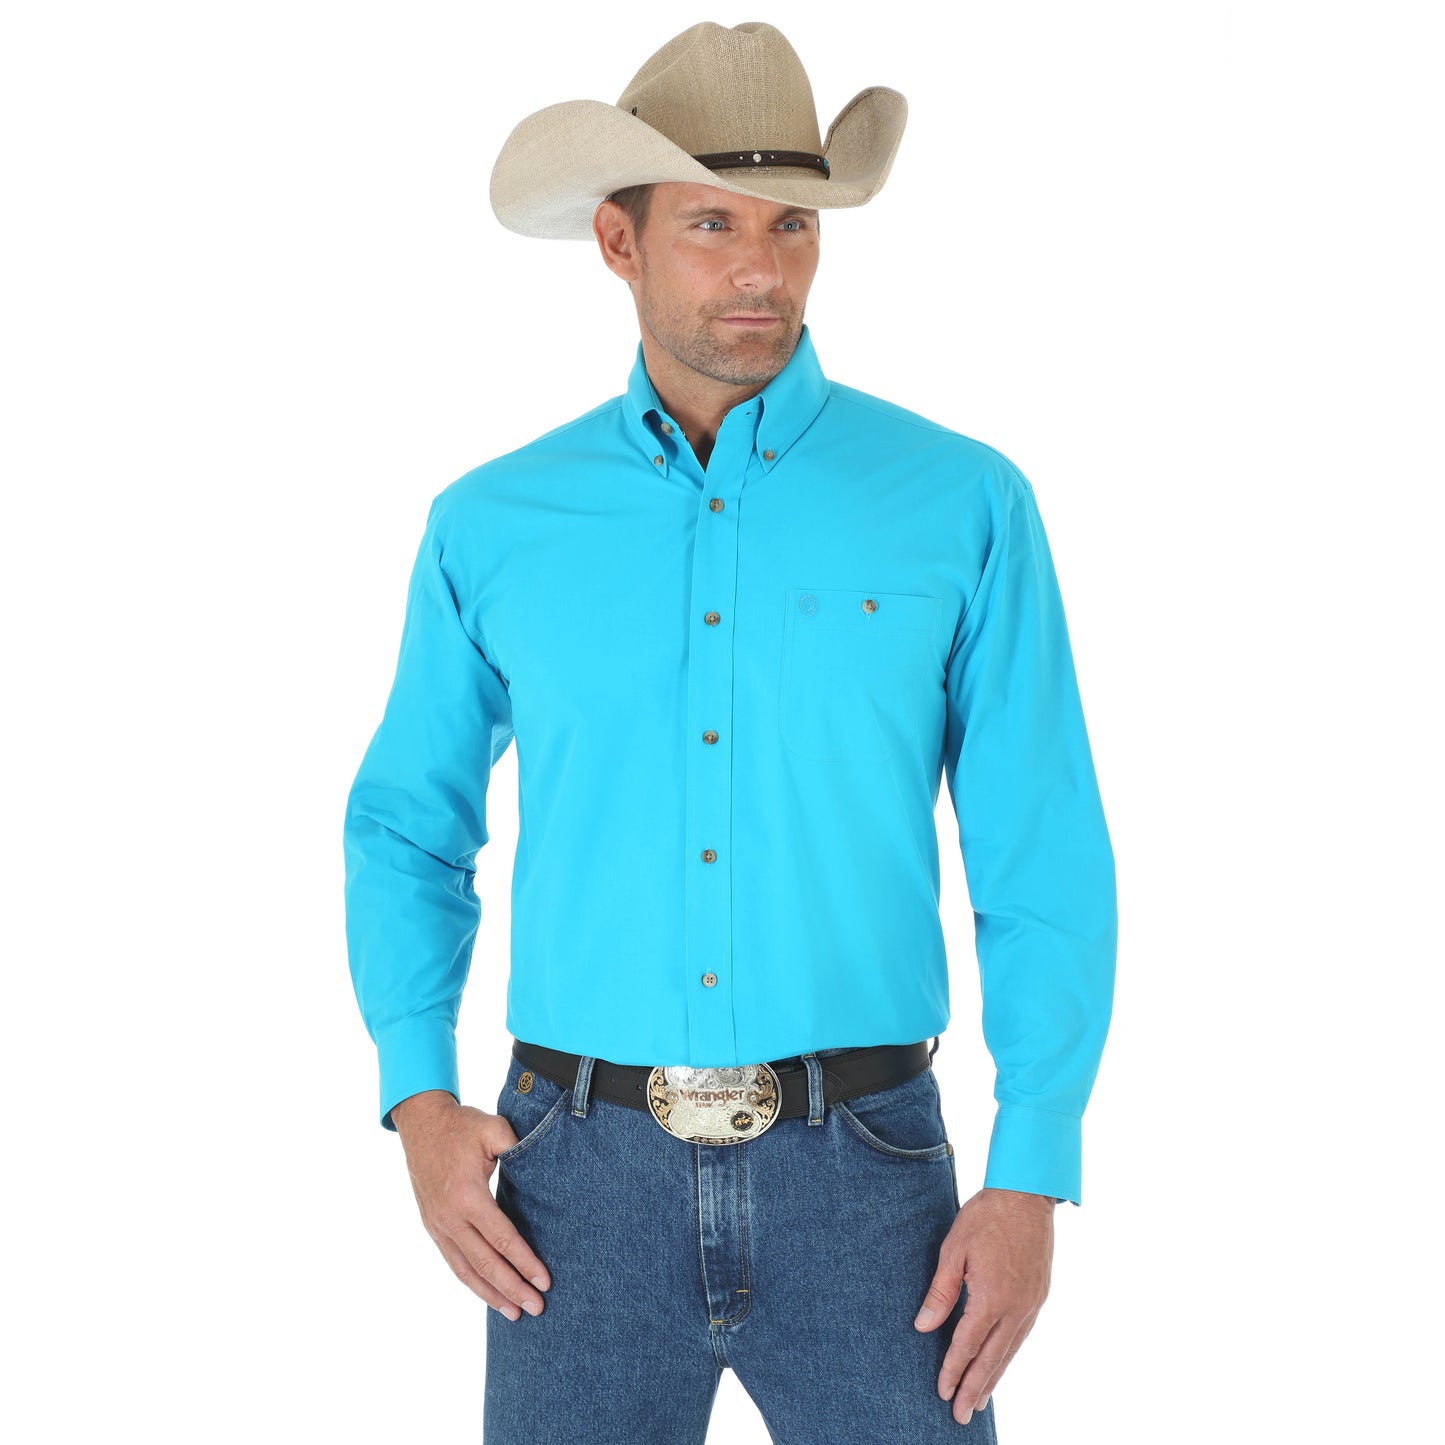 Wrangler George Strait Turquoise Long Sleeve Shirt